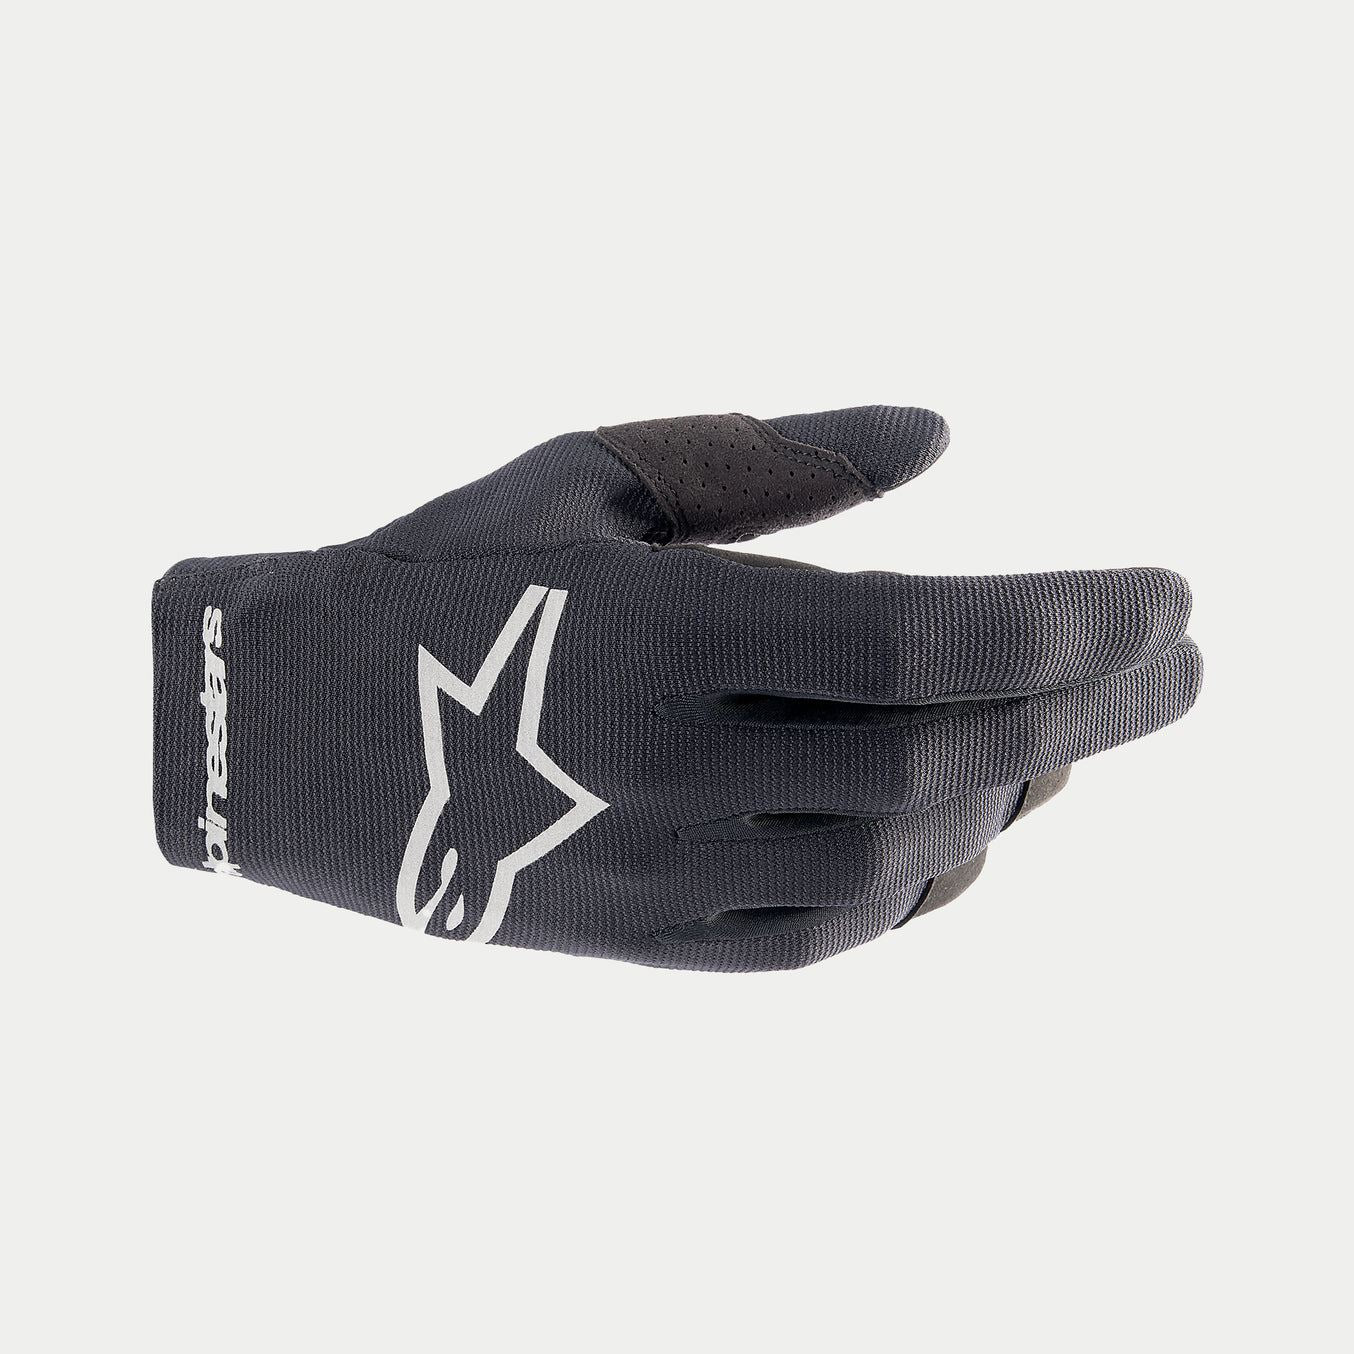 Alpinestars 2024 Radar Youth Motocross Gloves Yellow Fluo Black